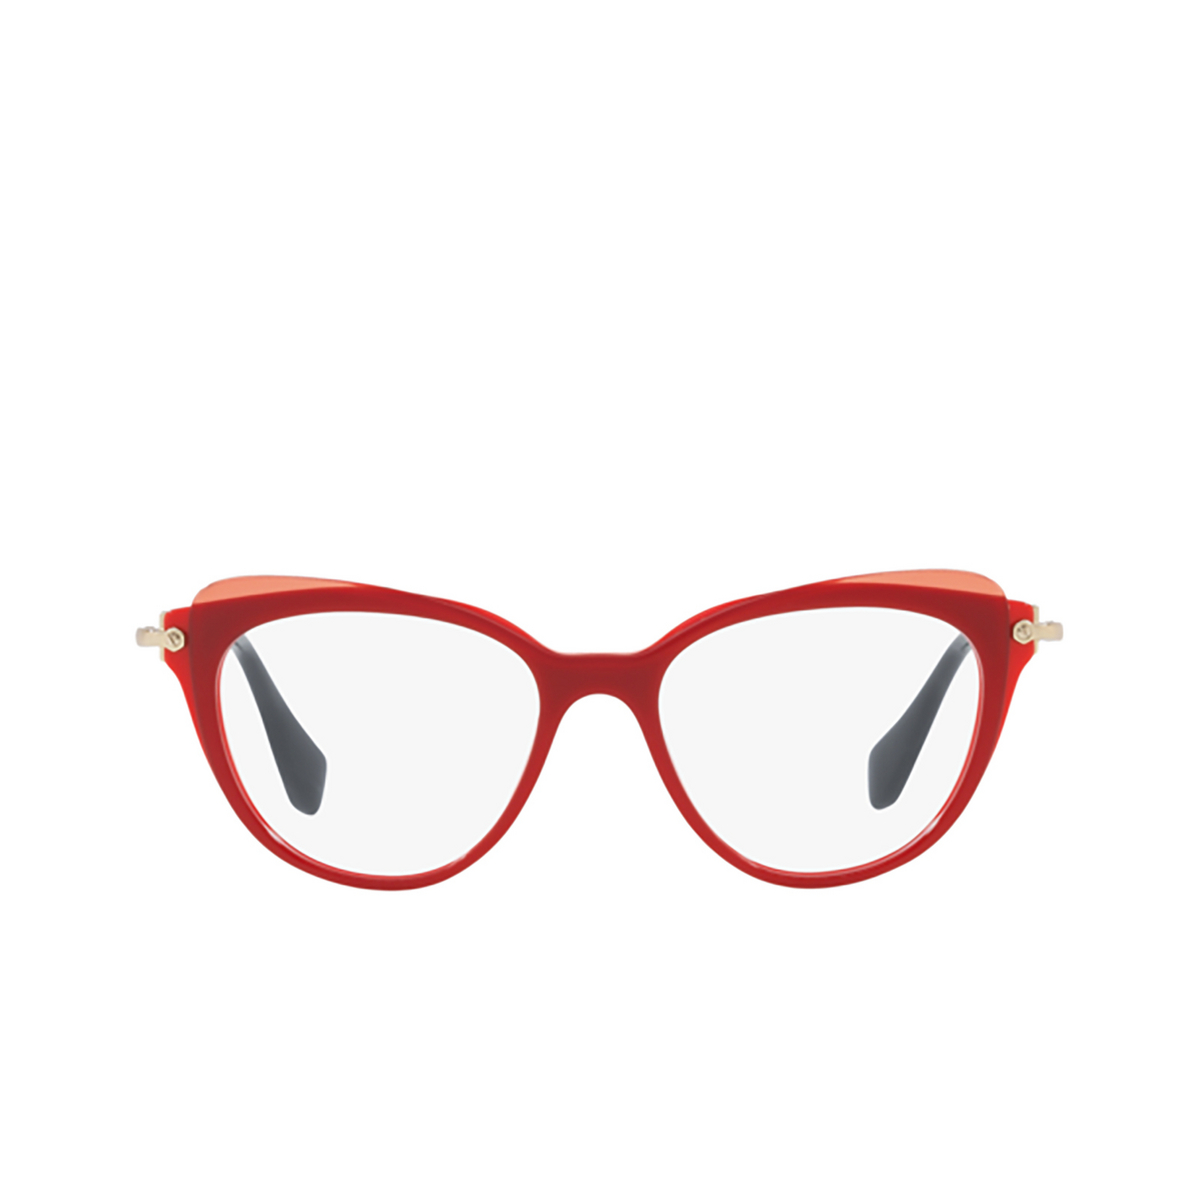 Miu Miu® Cat-eye Eyeglasses: MU 01QV color Red / Top Transparent Red VX91O1 - front view.